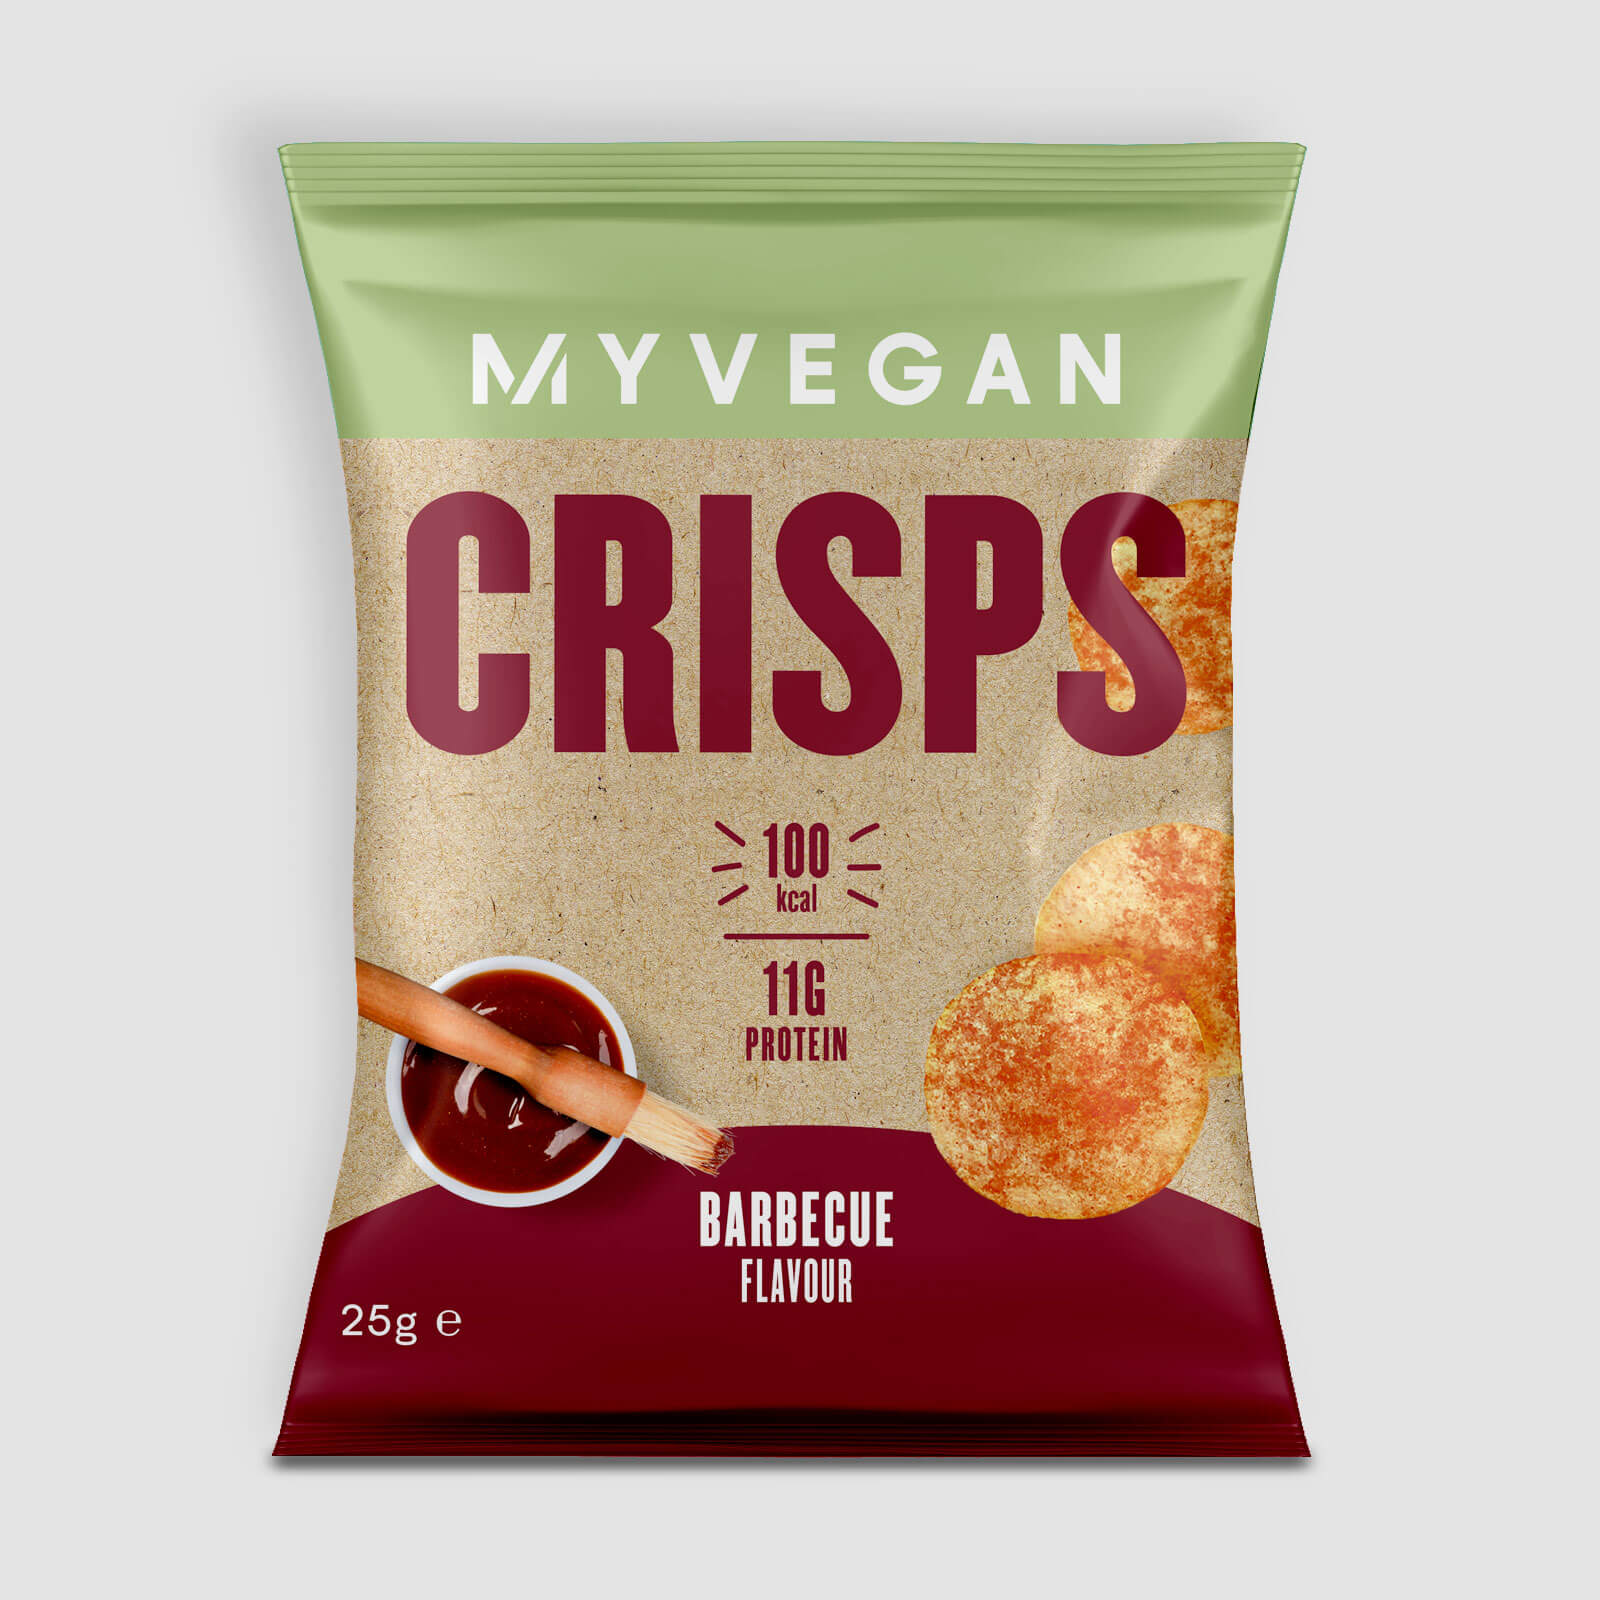 Myvegan Vegan Protein Crisps (Sample) - 25g - Barbecue